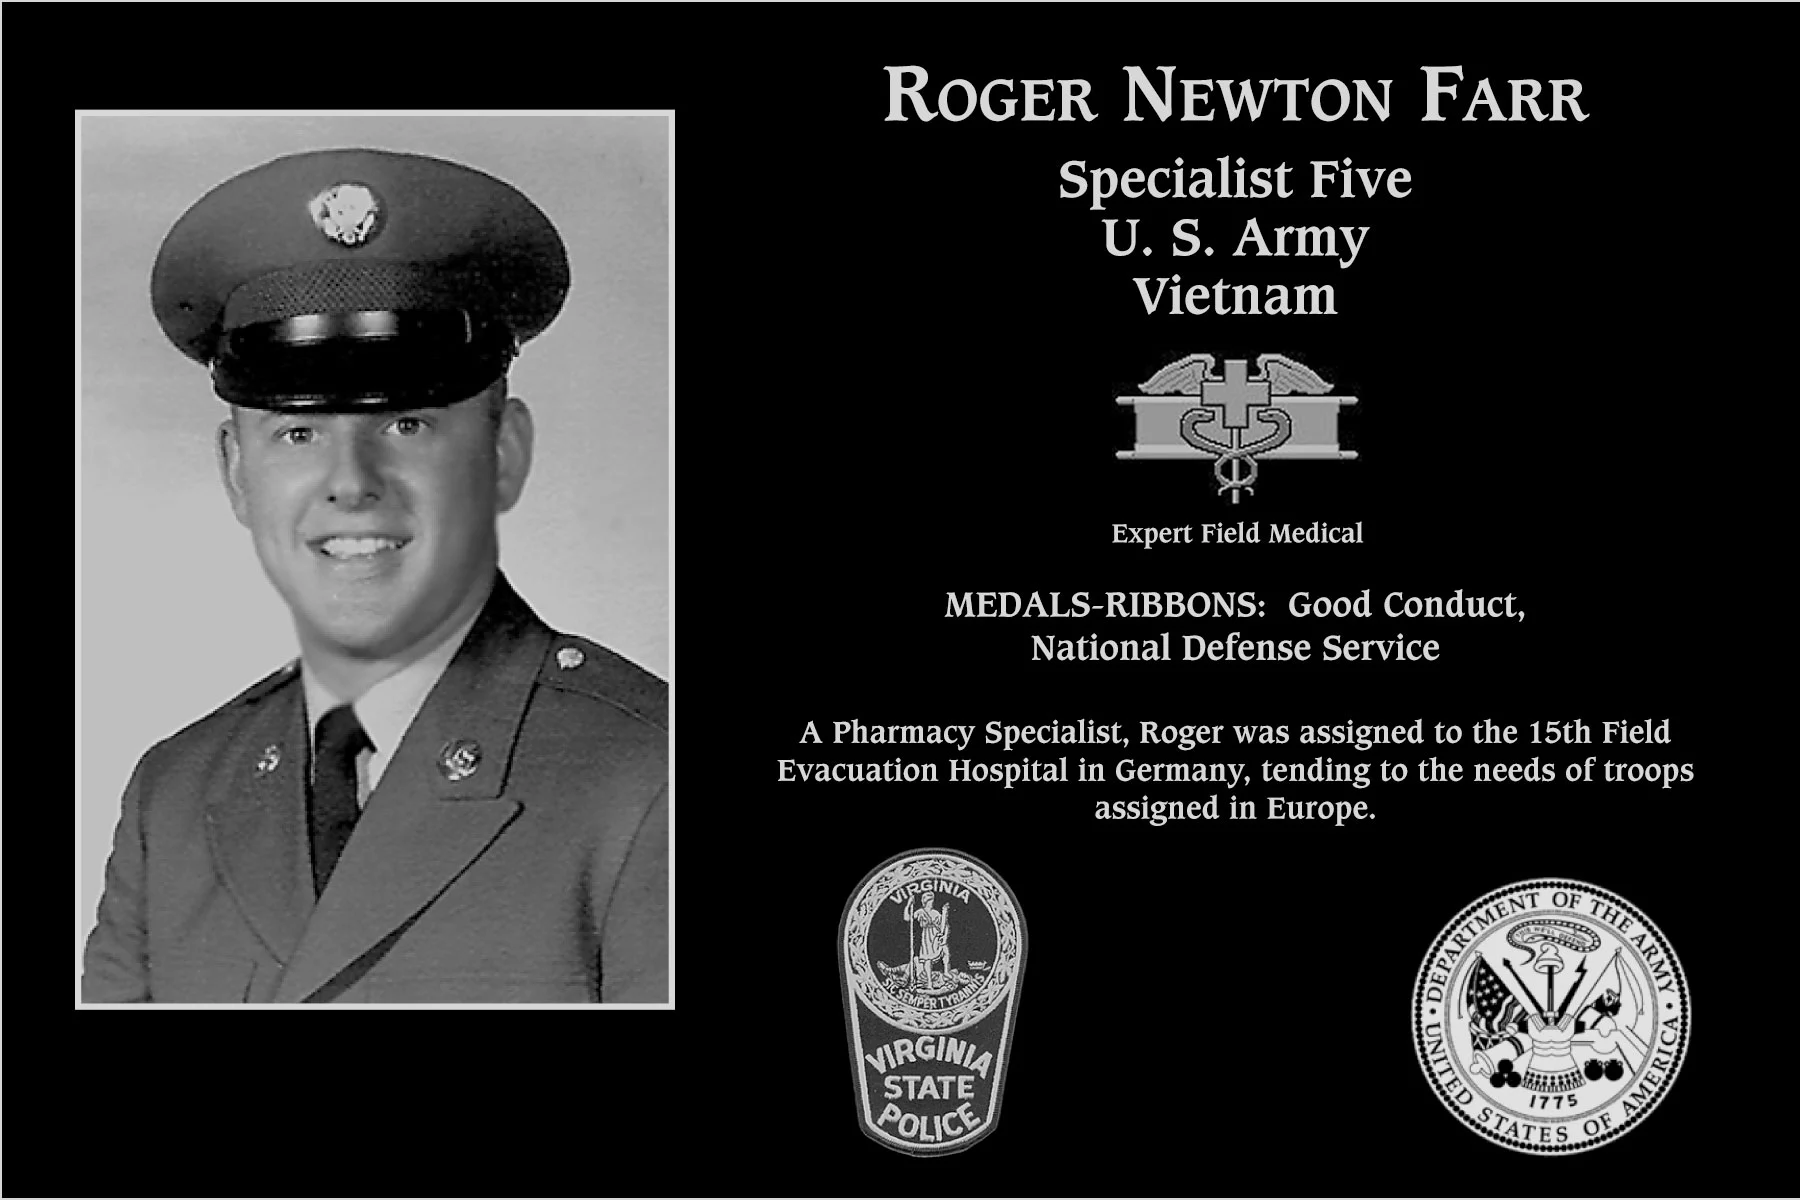 Roger Newton Farr